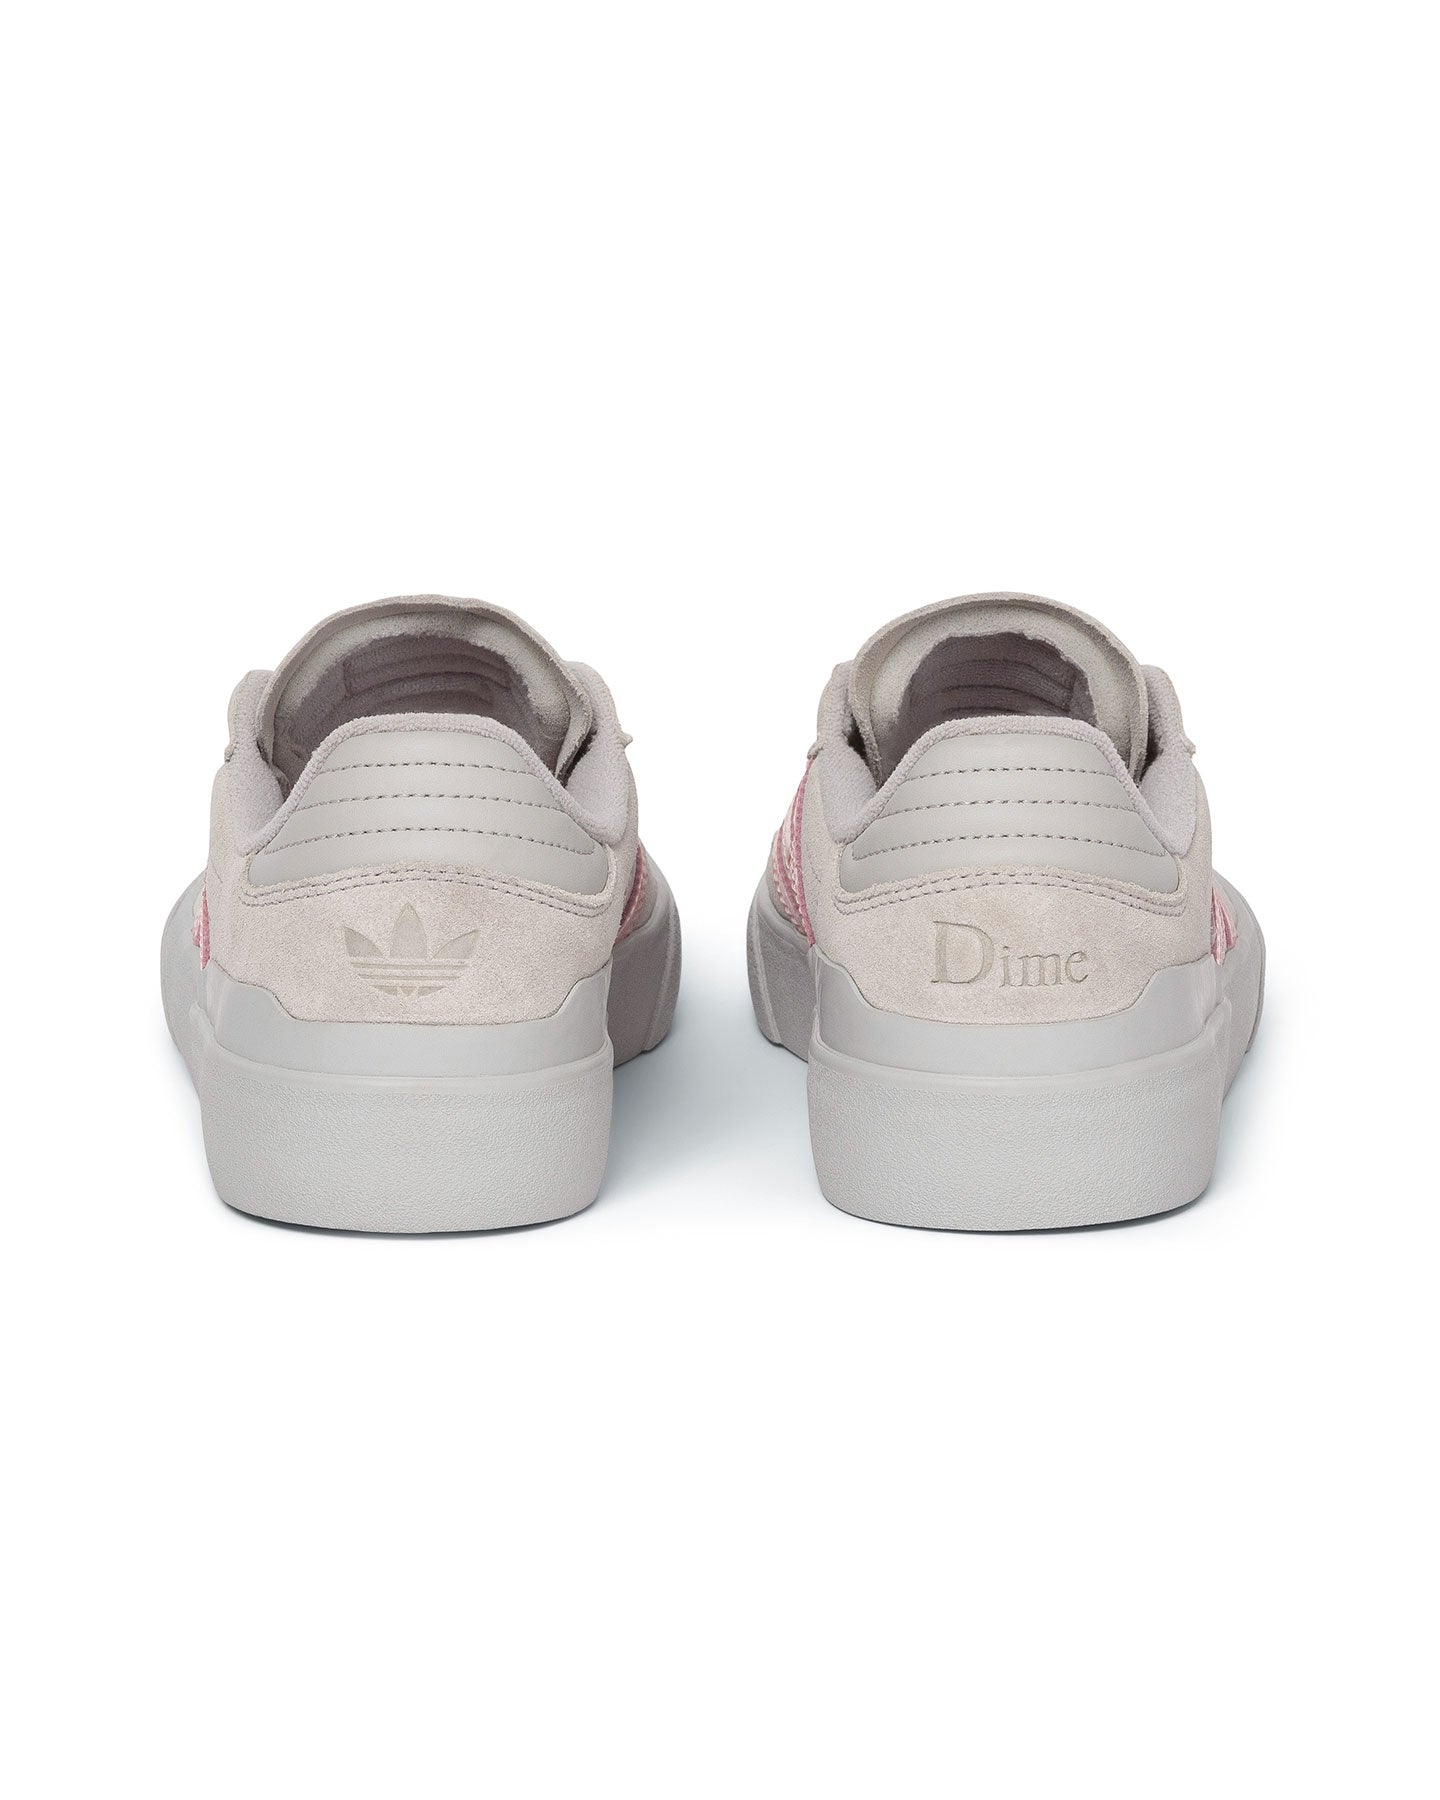 Adidas x Dime Busenitz Vulc 2 - Grey / Pink